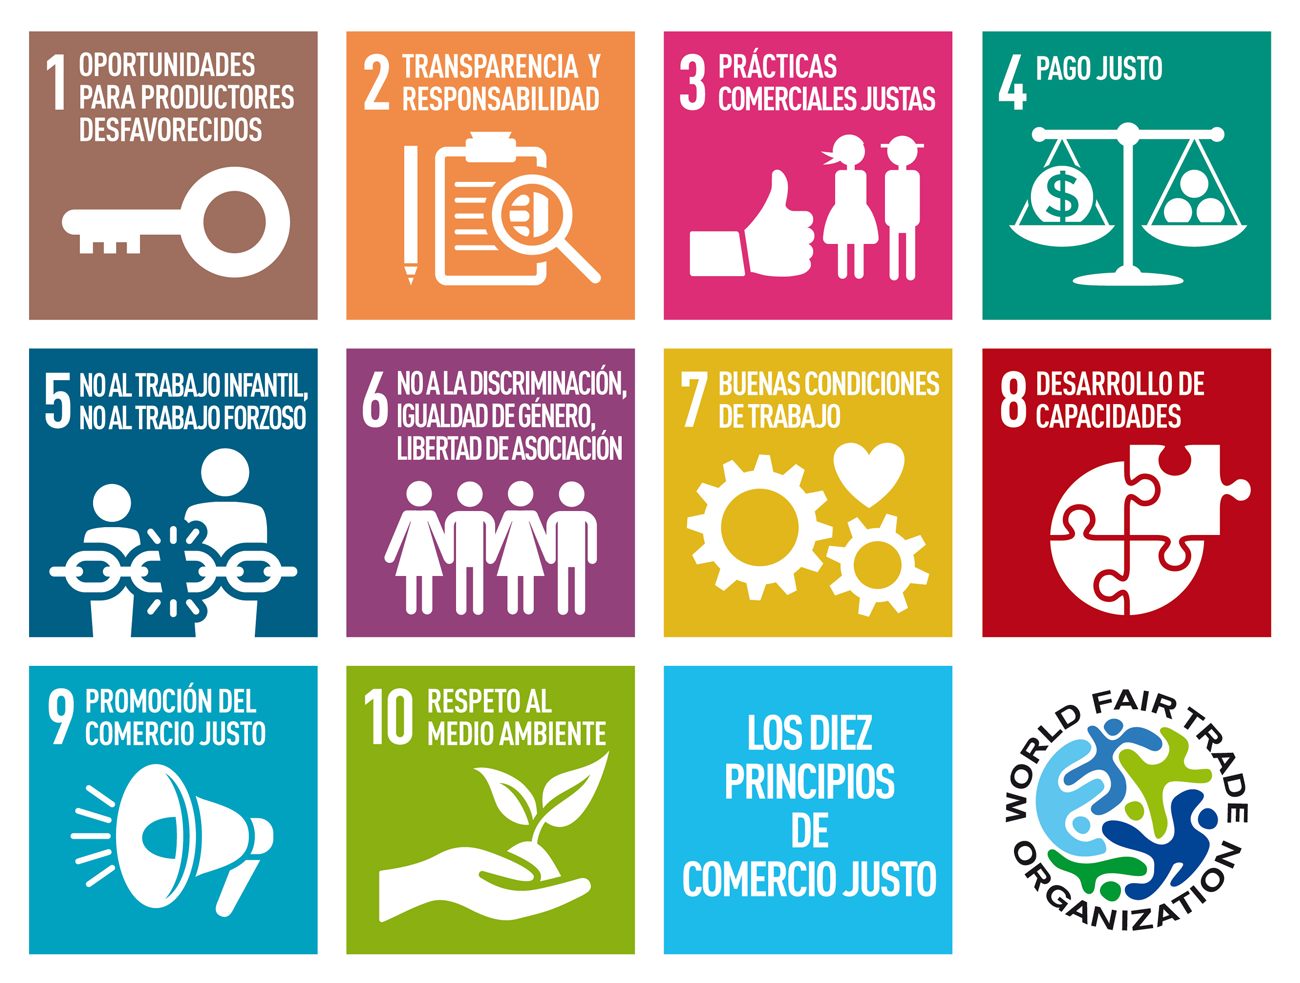 fair-trade-principles-icons_spanish